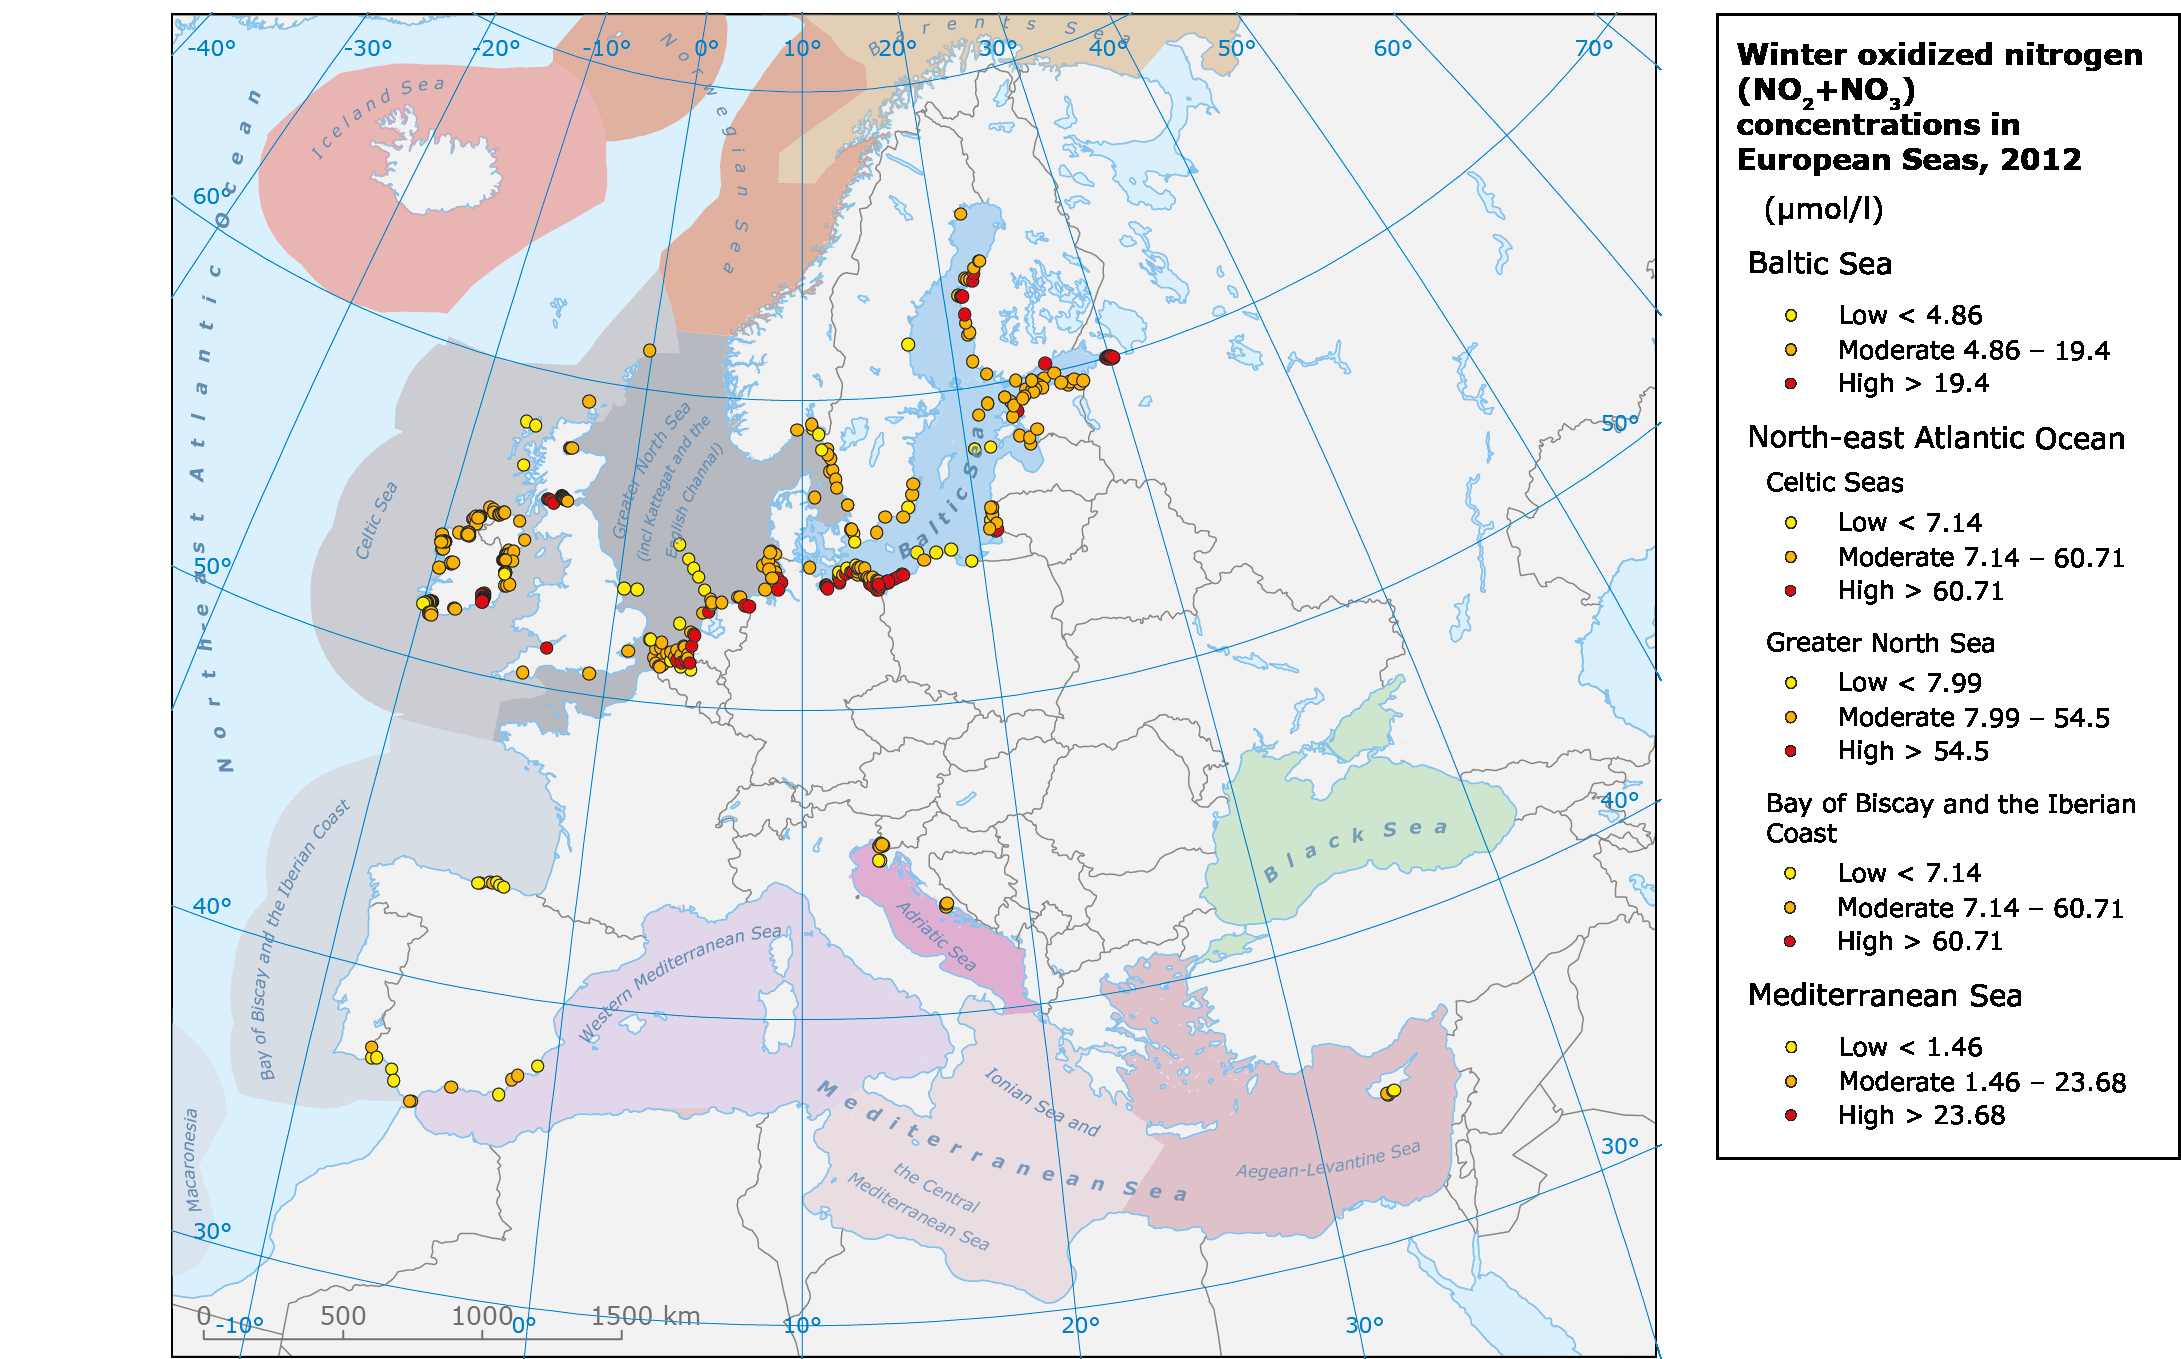 Oxidised nitrogen concentrations in European seas